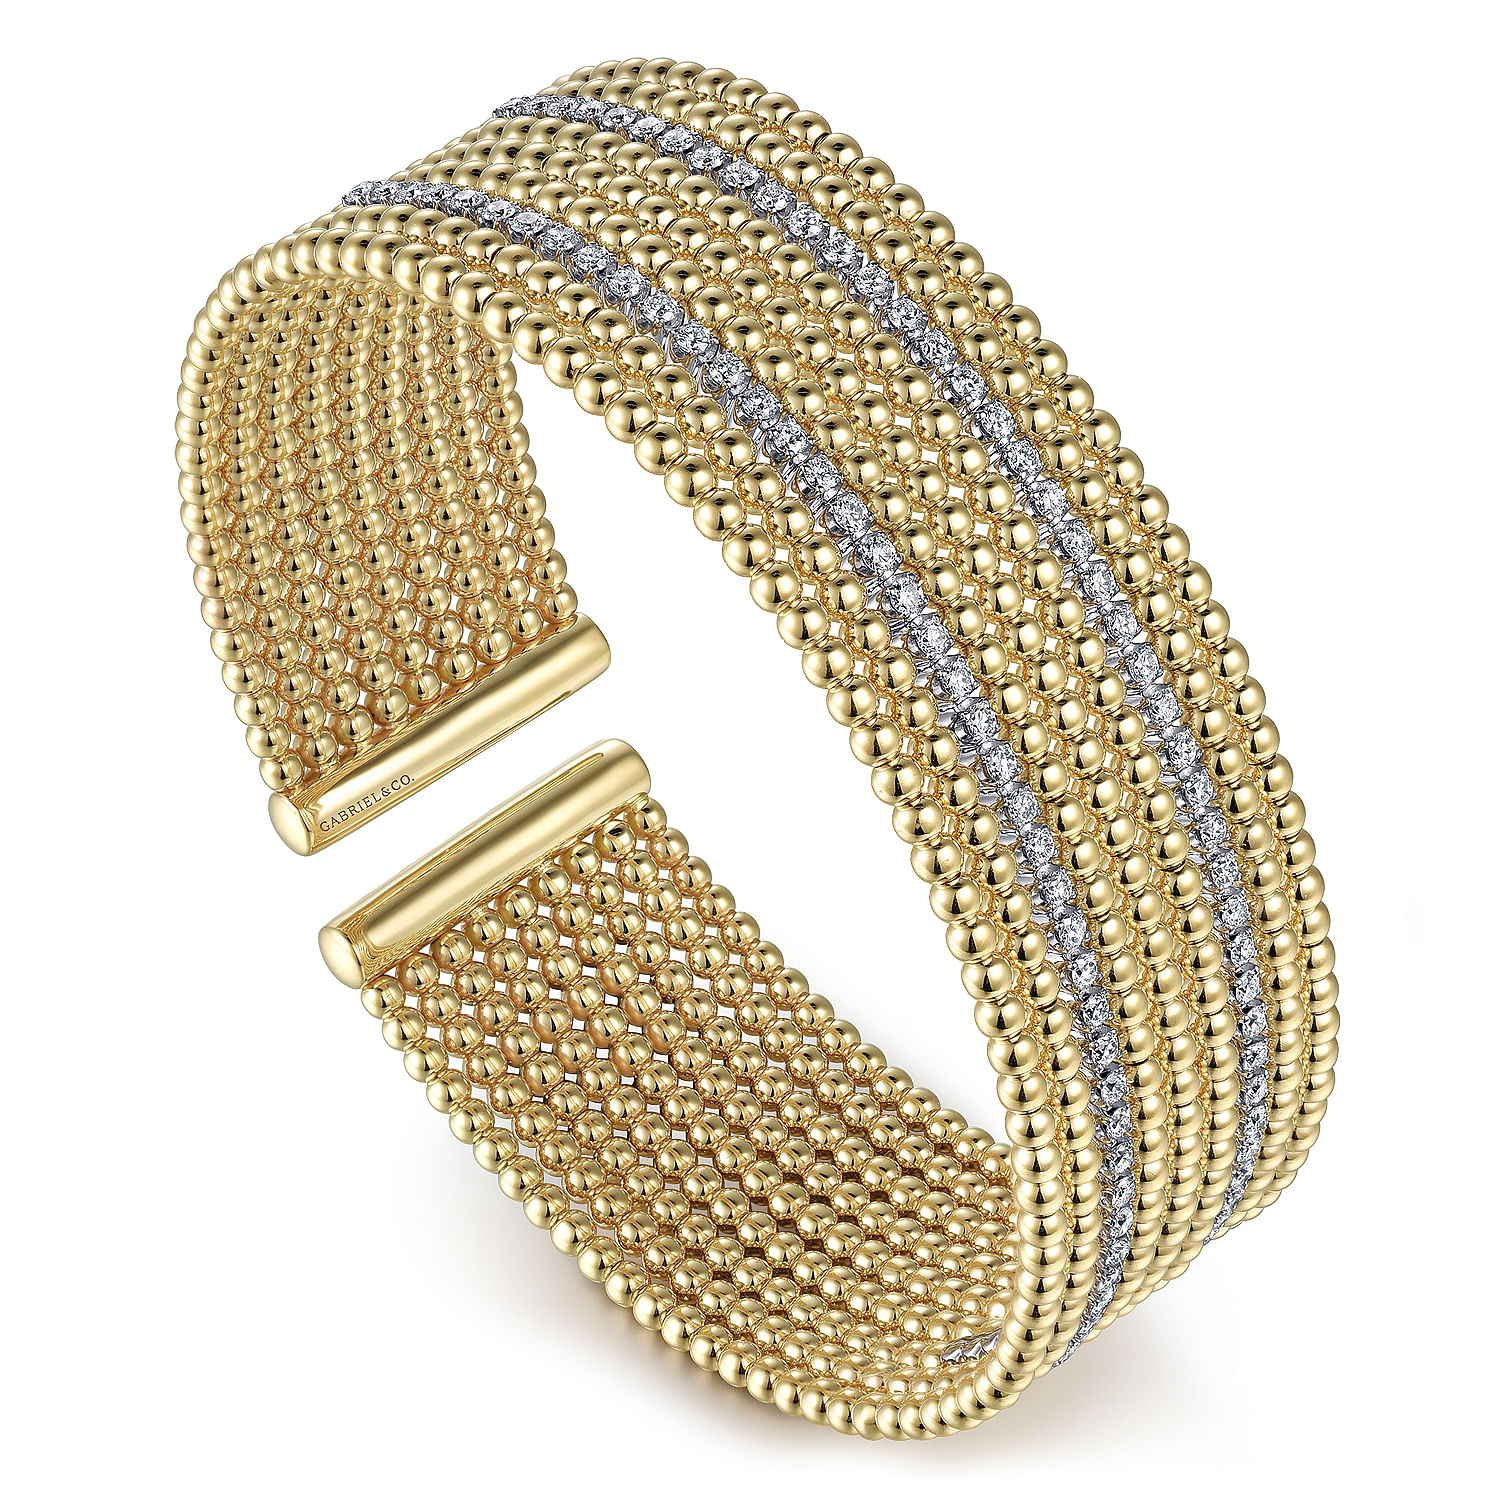 Wide 14K White-Yellow Gold Bujukan Bead Cuff Bracelet with Diamond Channels